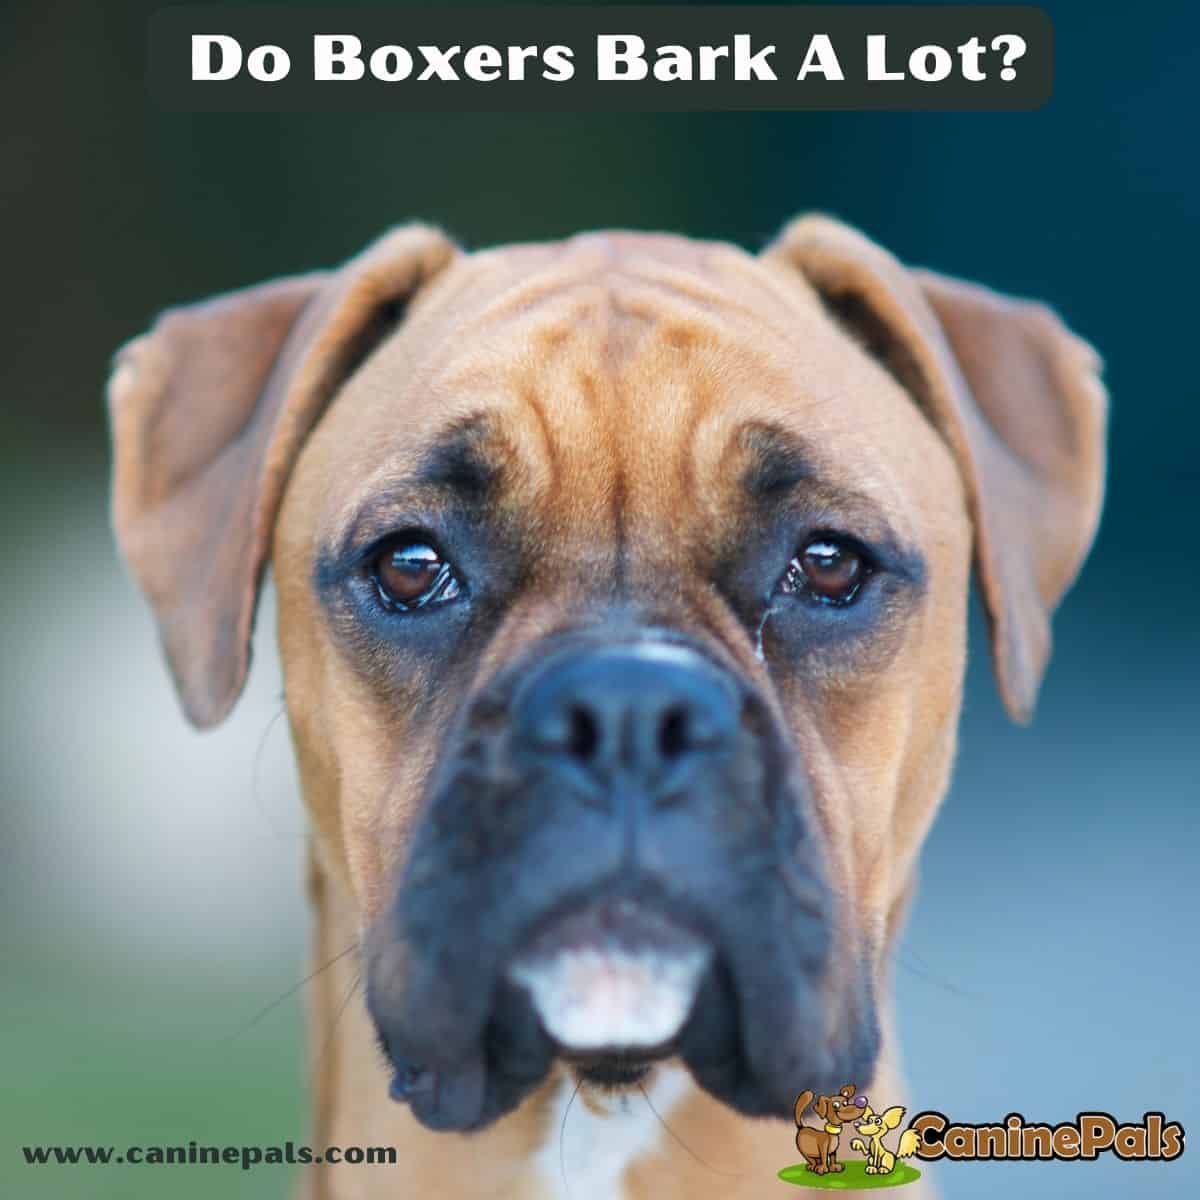 Do Boxers Bark a Lot?